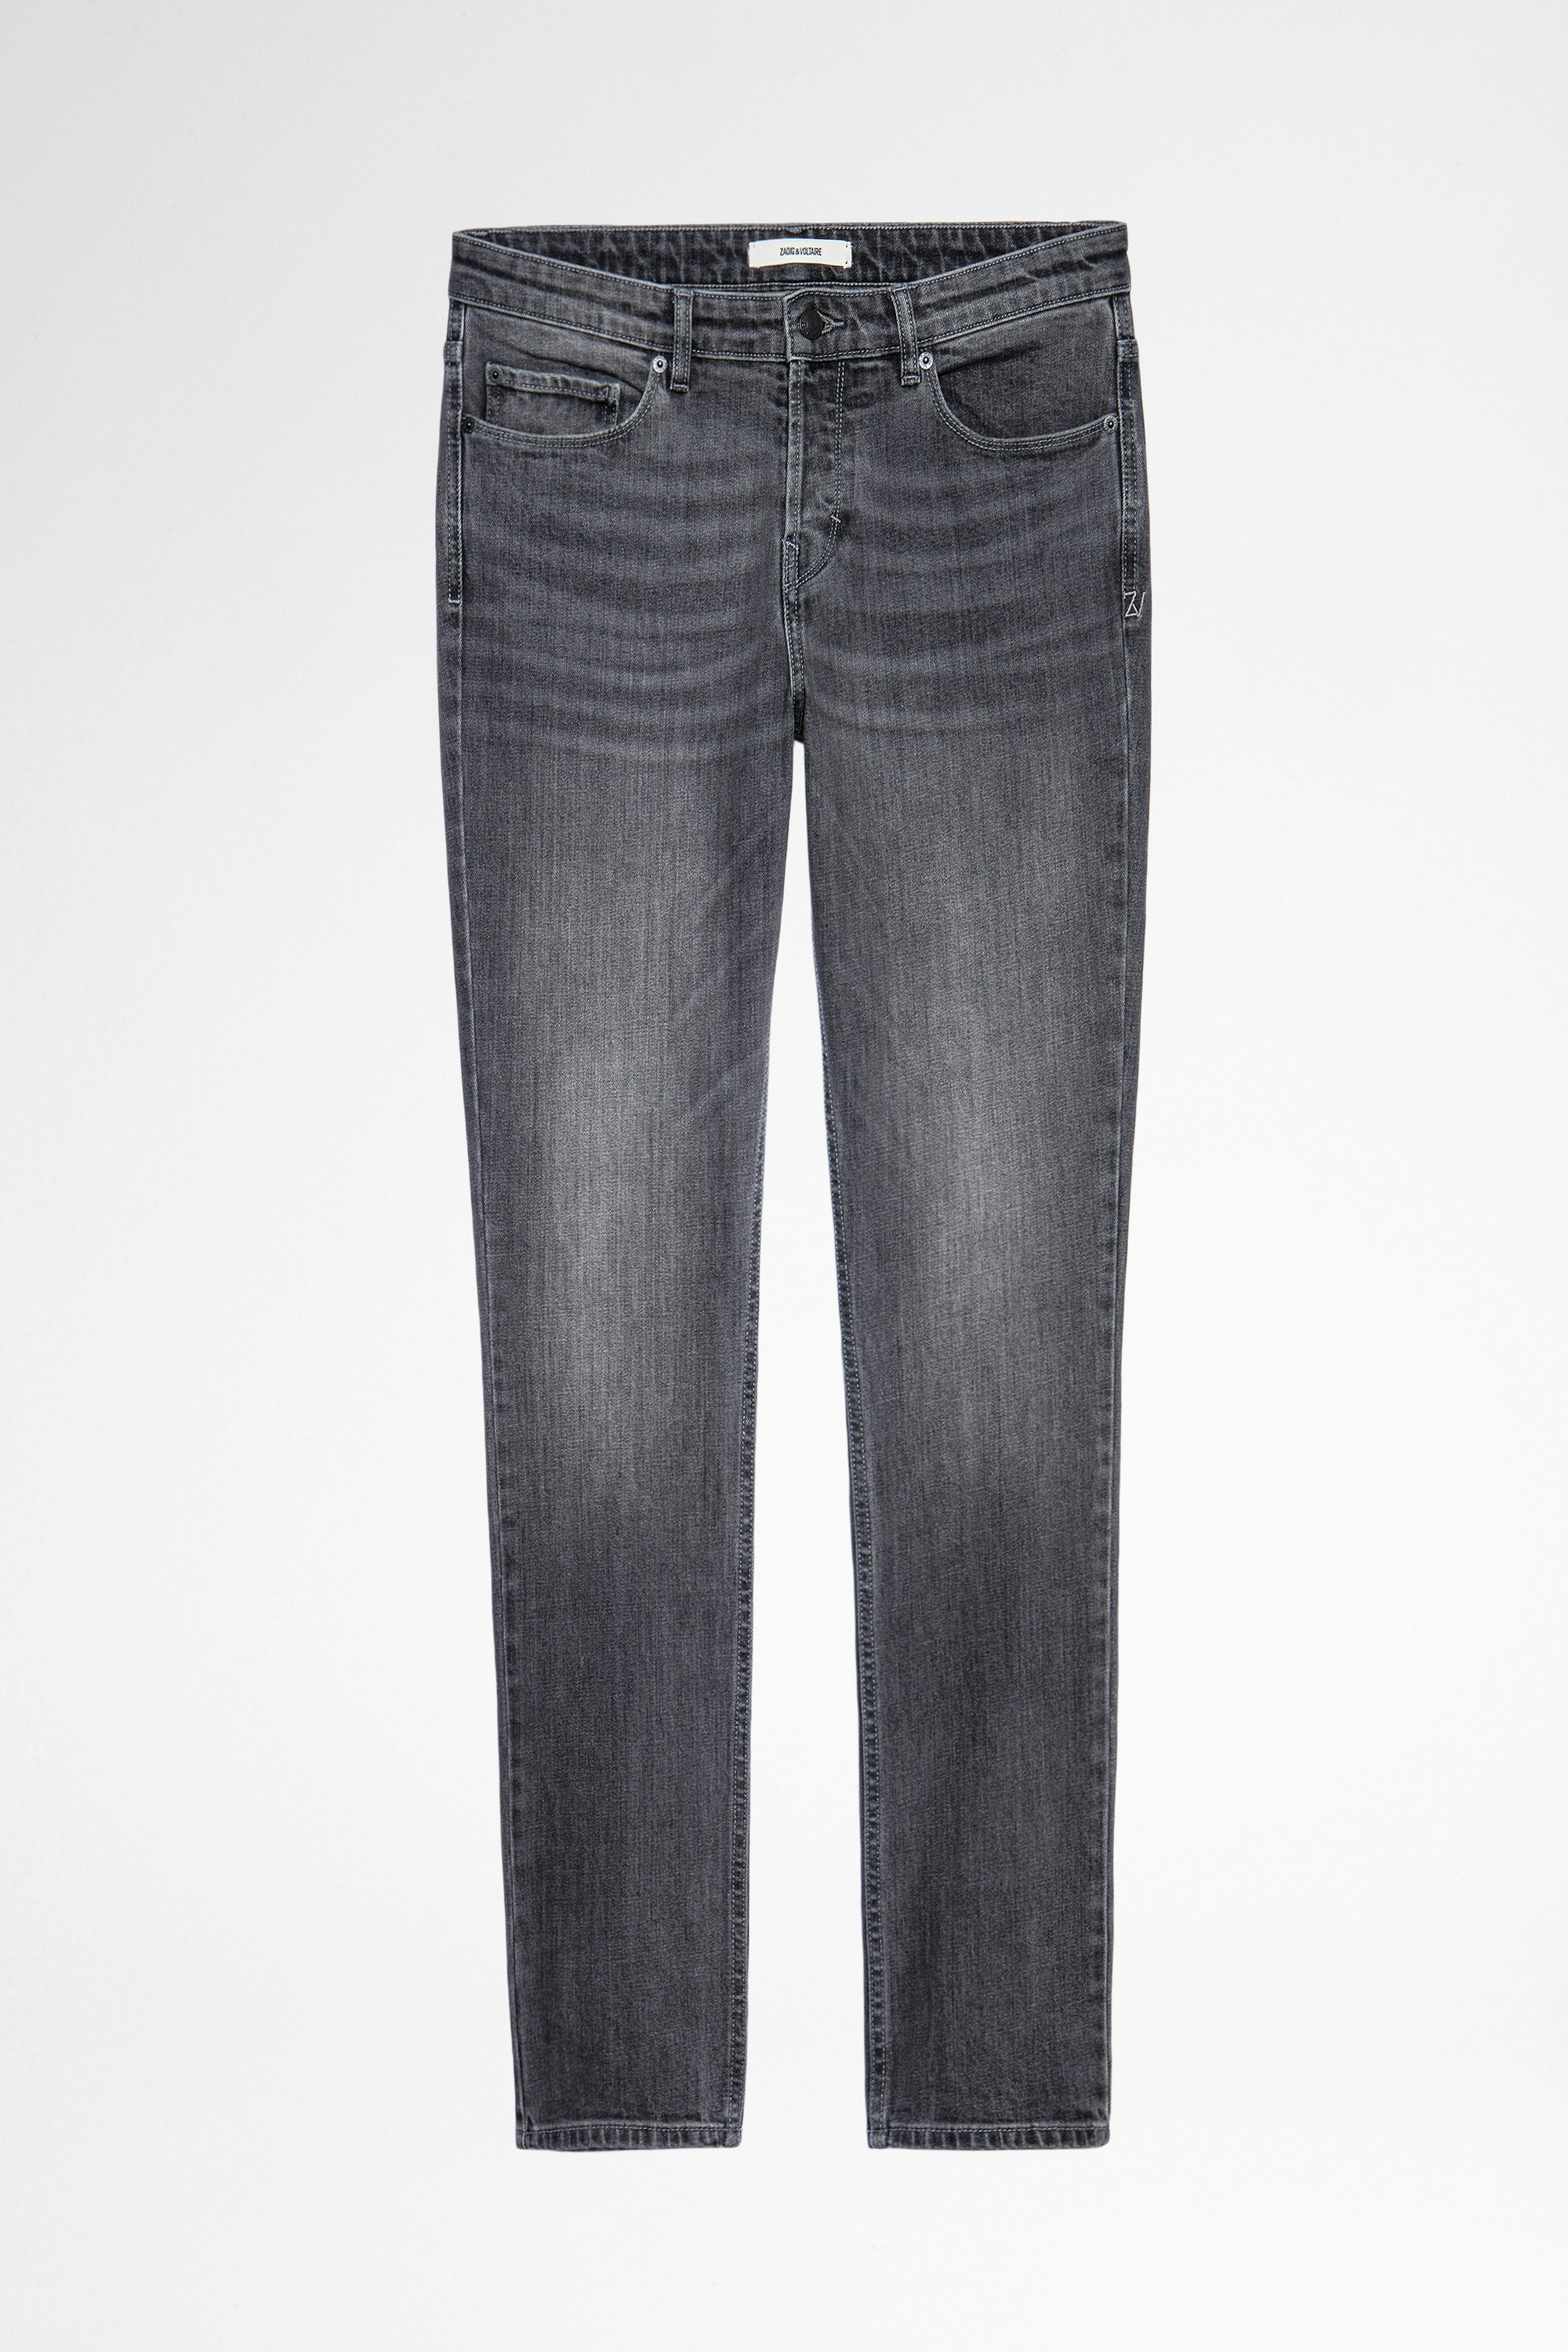 David Eco Jeans Men's gray jeans